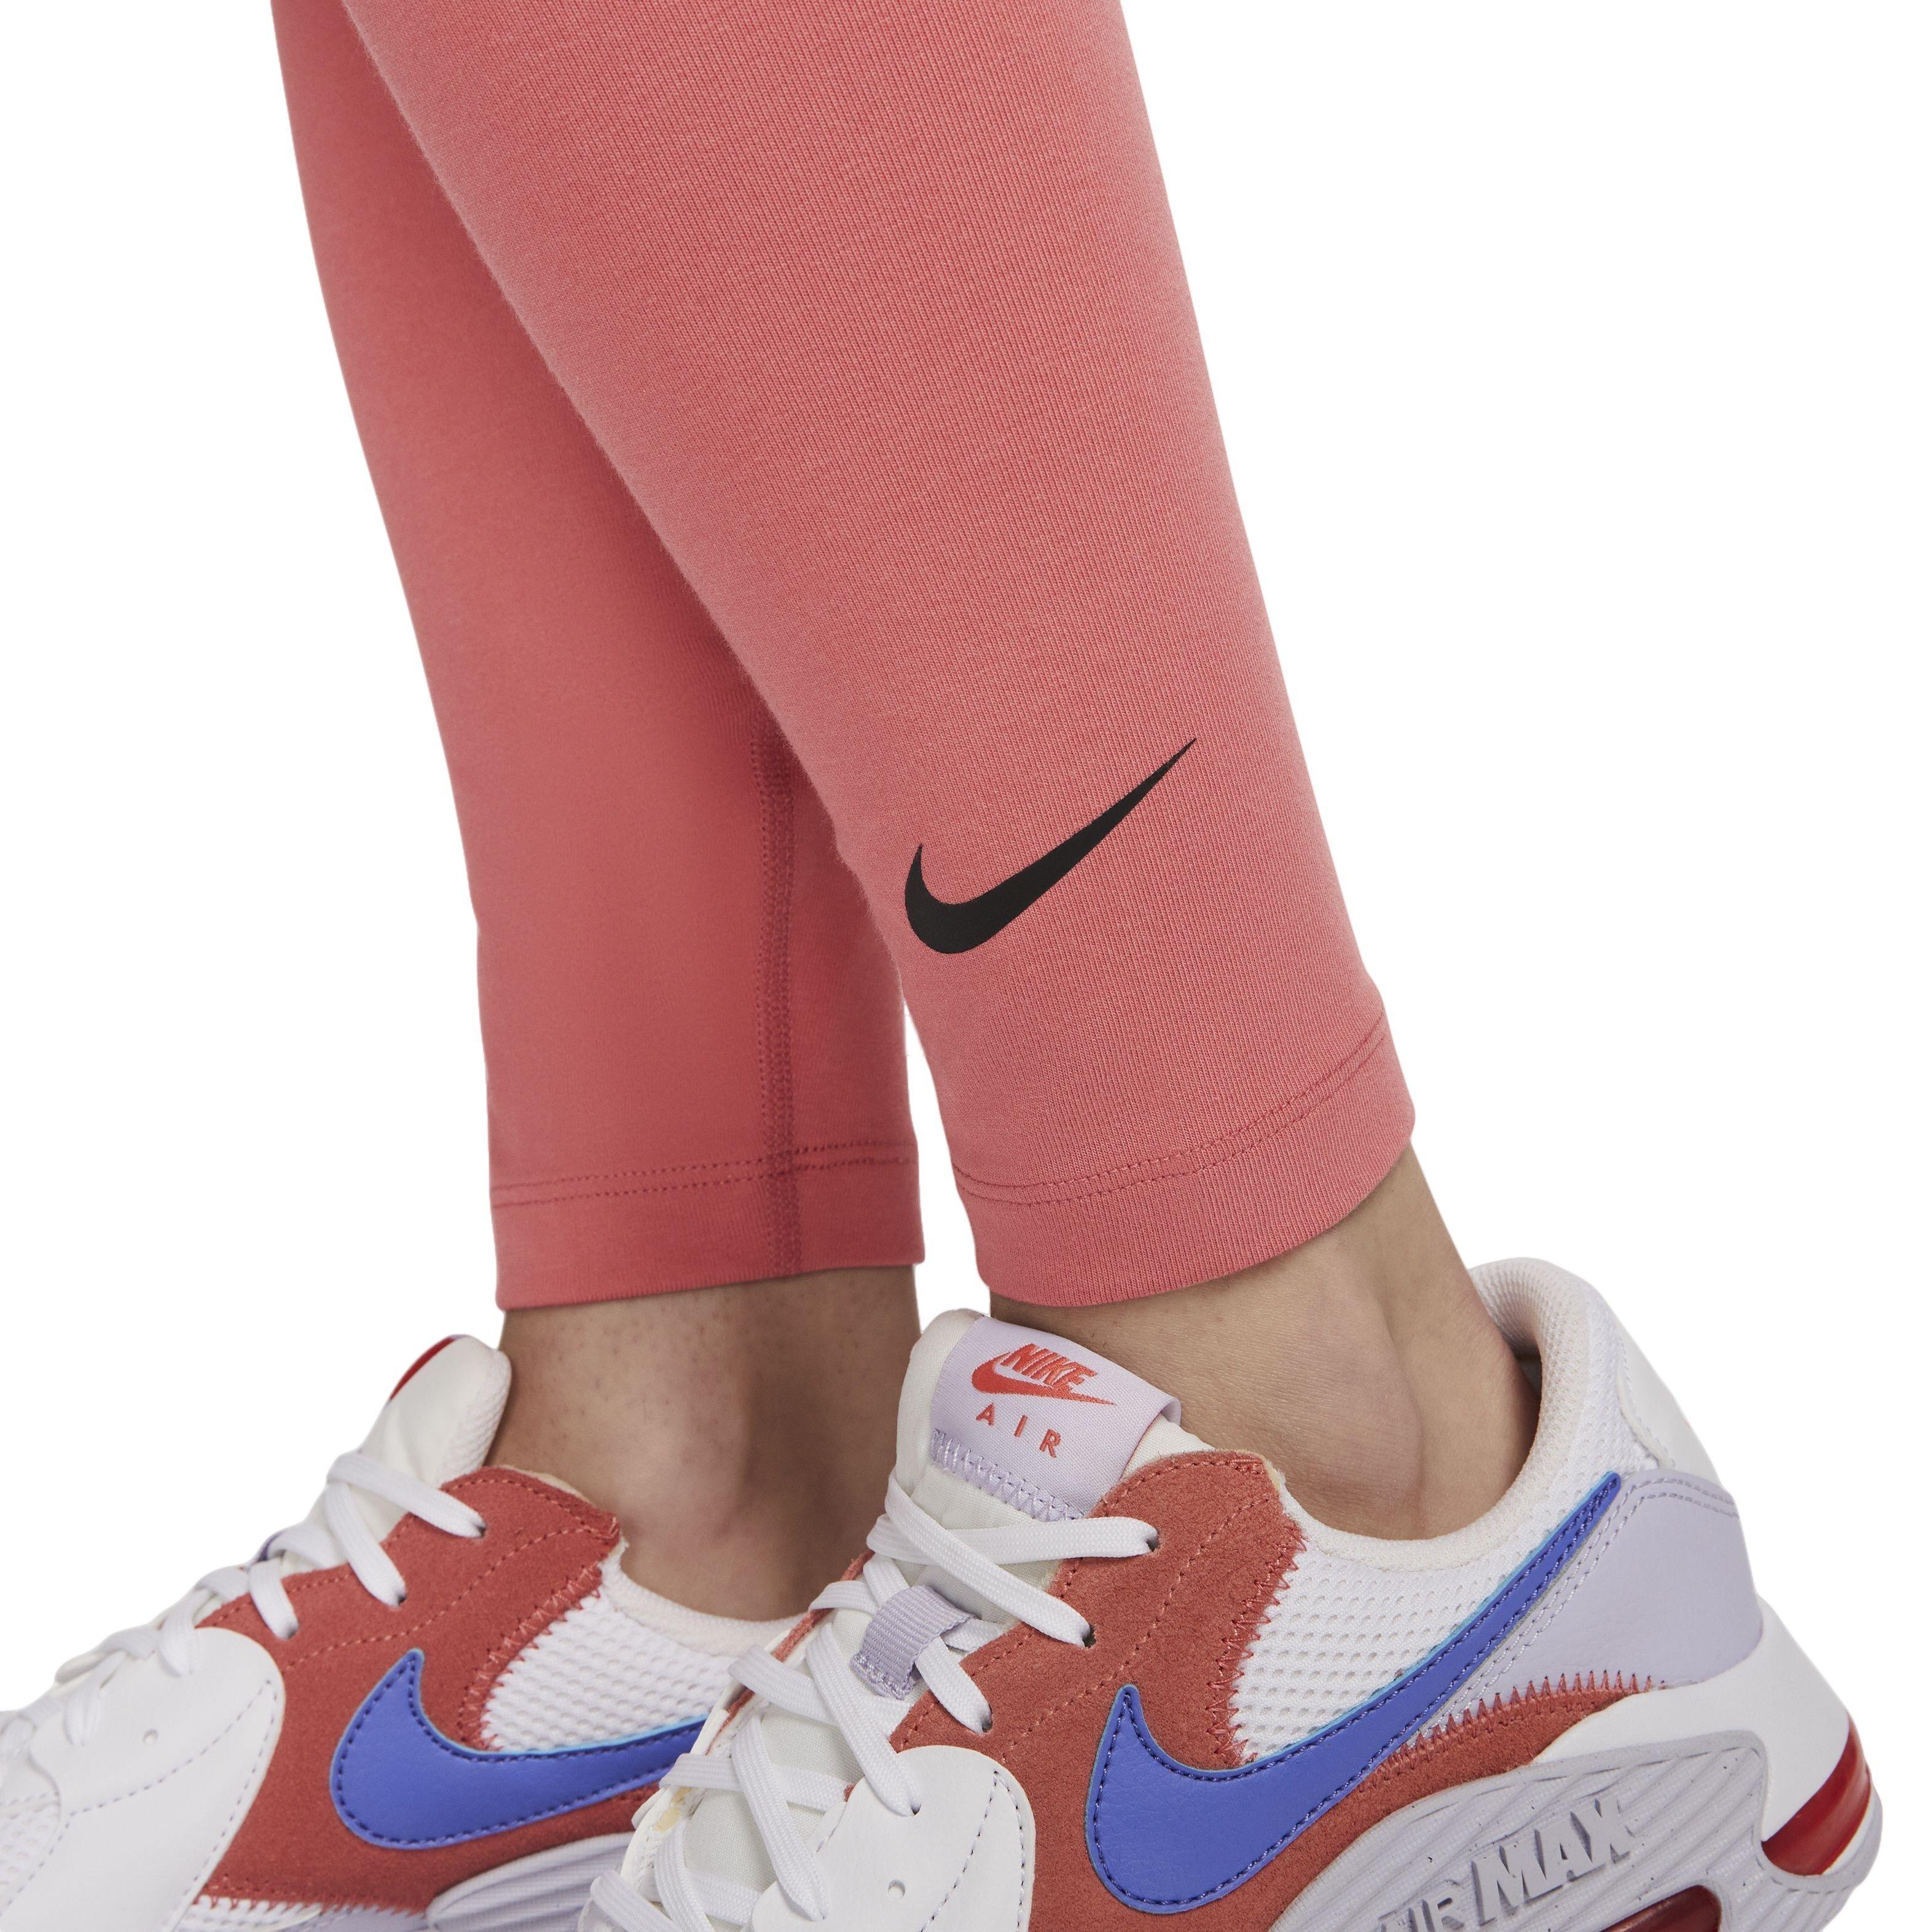 Women's Nike Sportswear Club High-Waisted Leggings